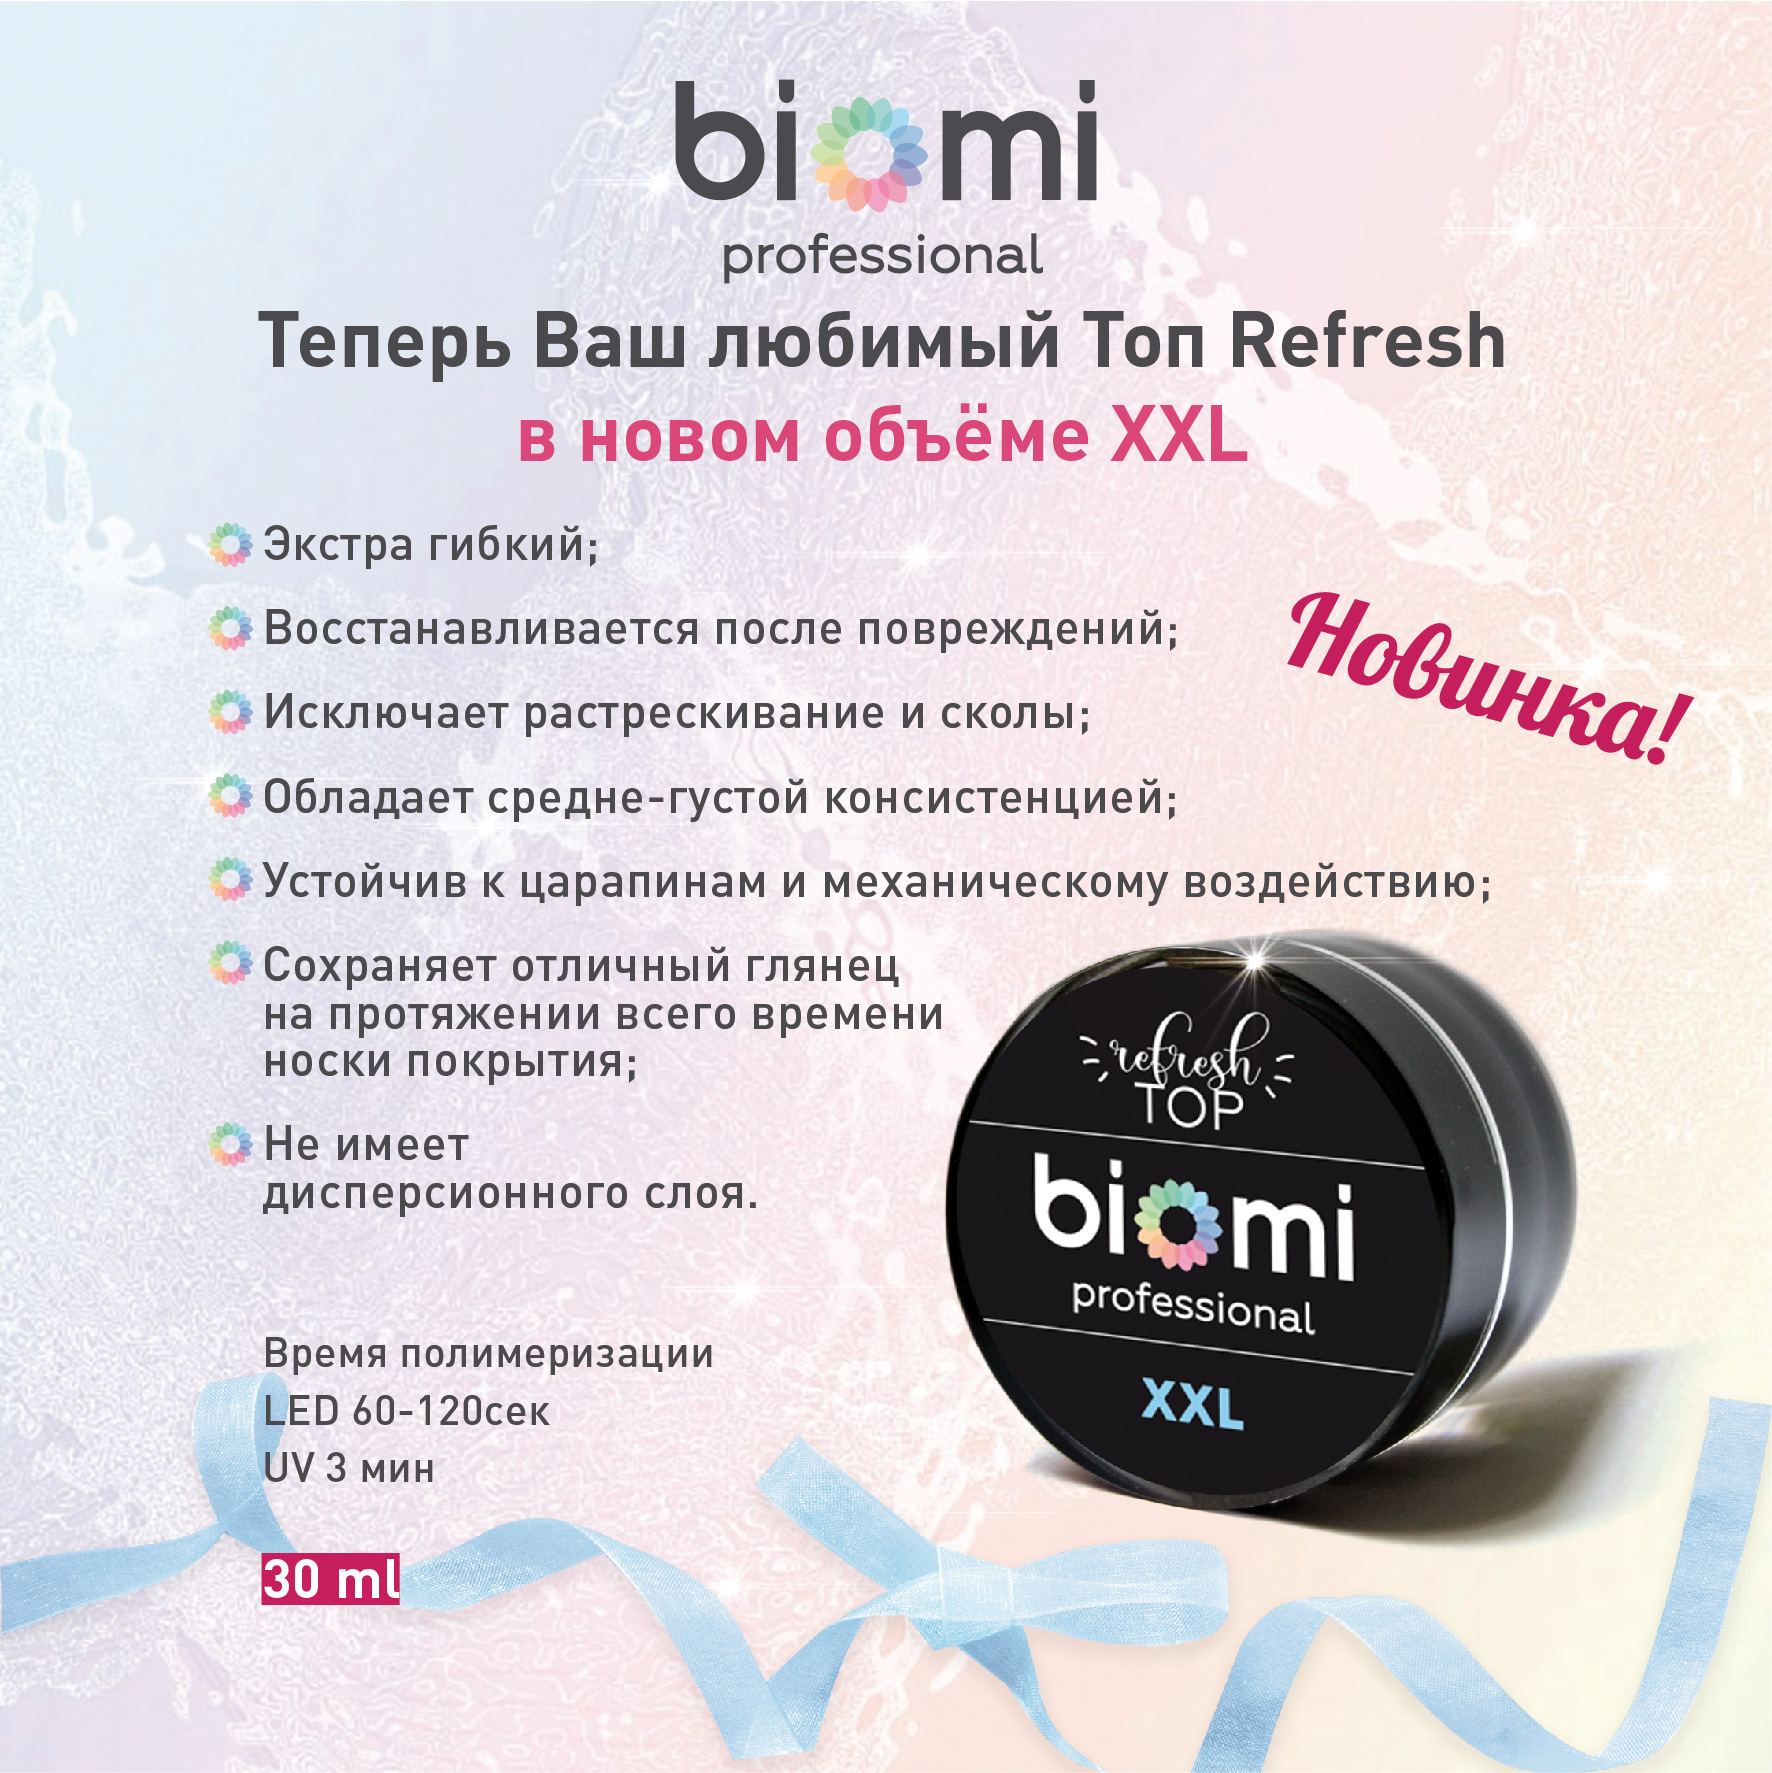 Biomi Топ refresh 30мл